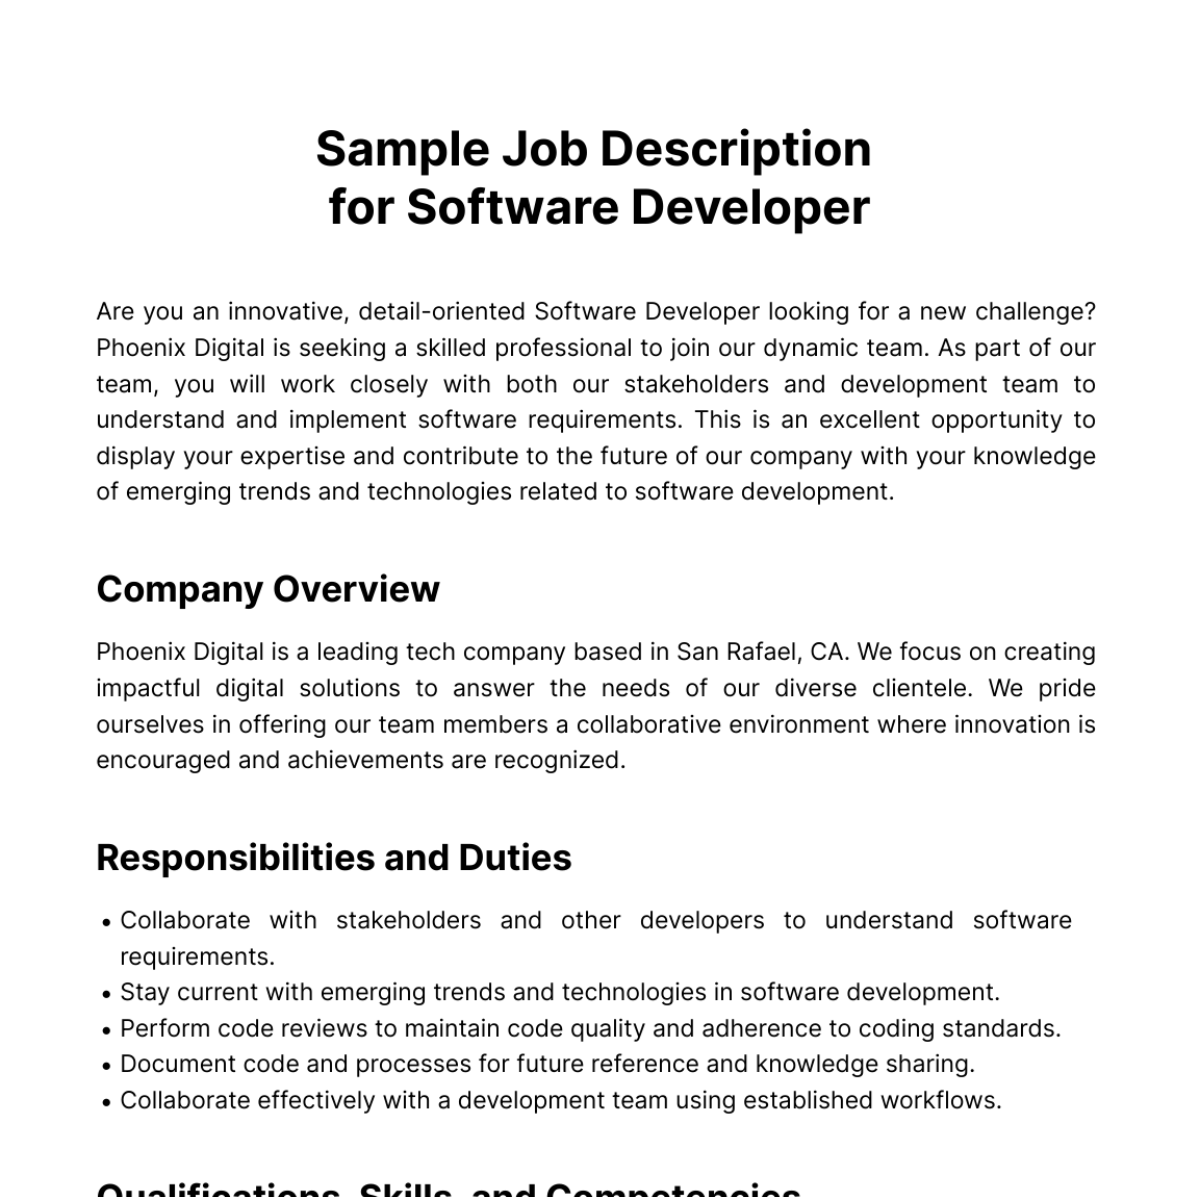 Sample Job Description for Software Developer Template